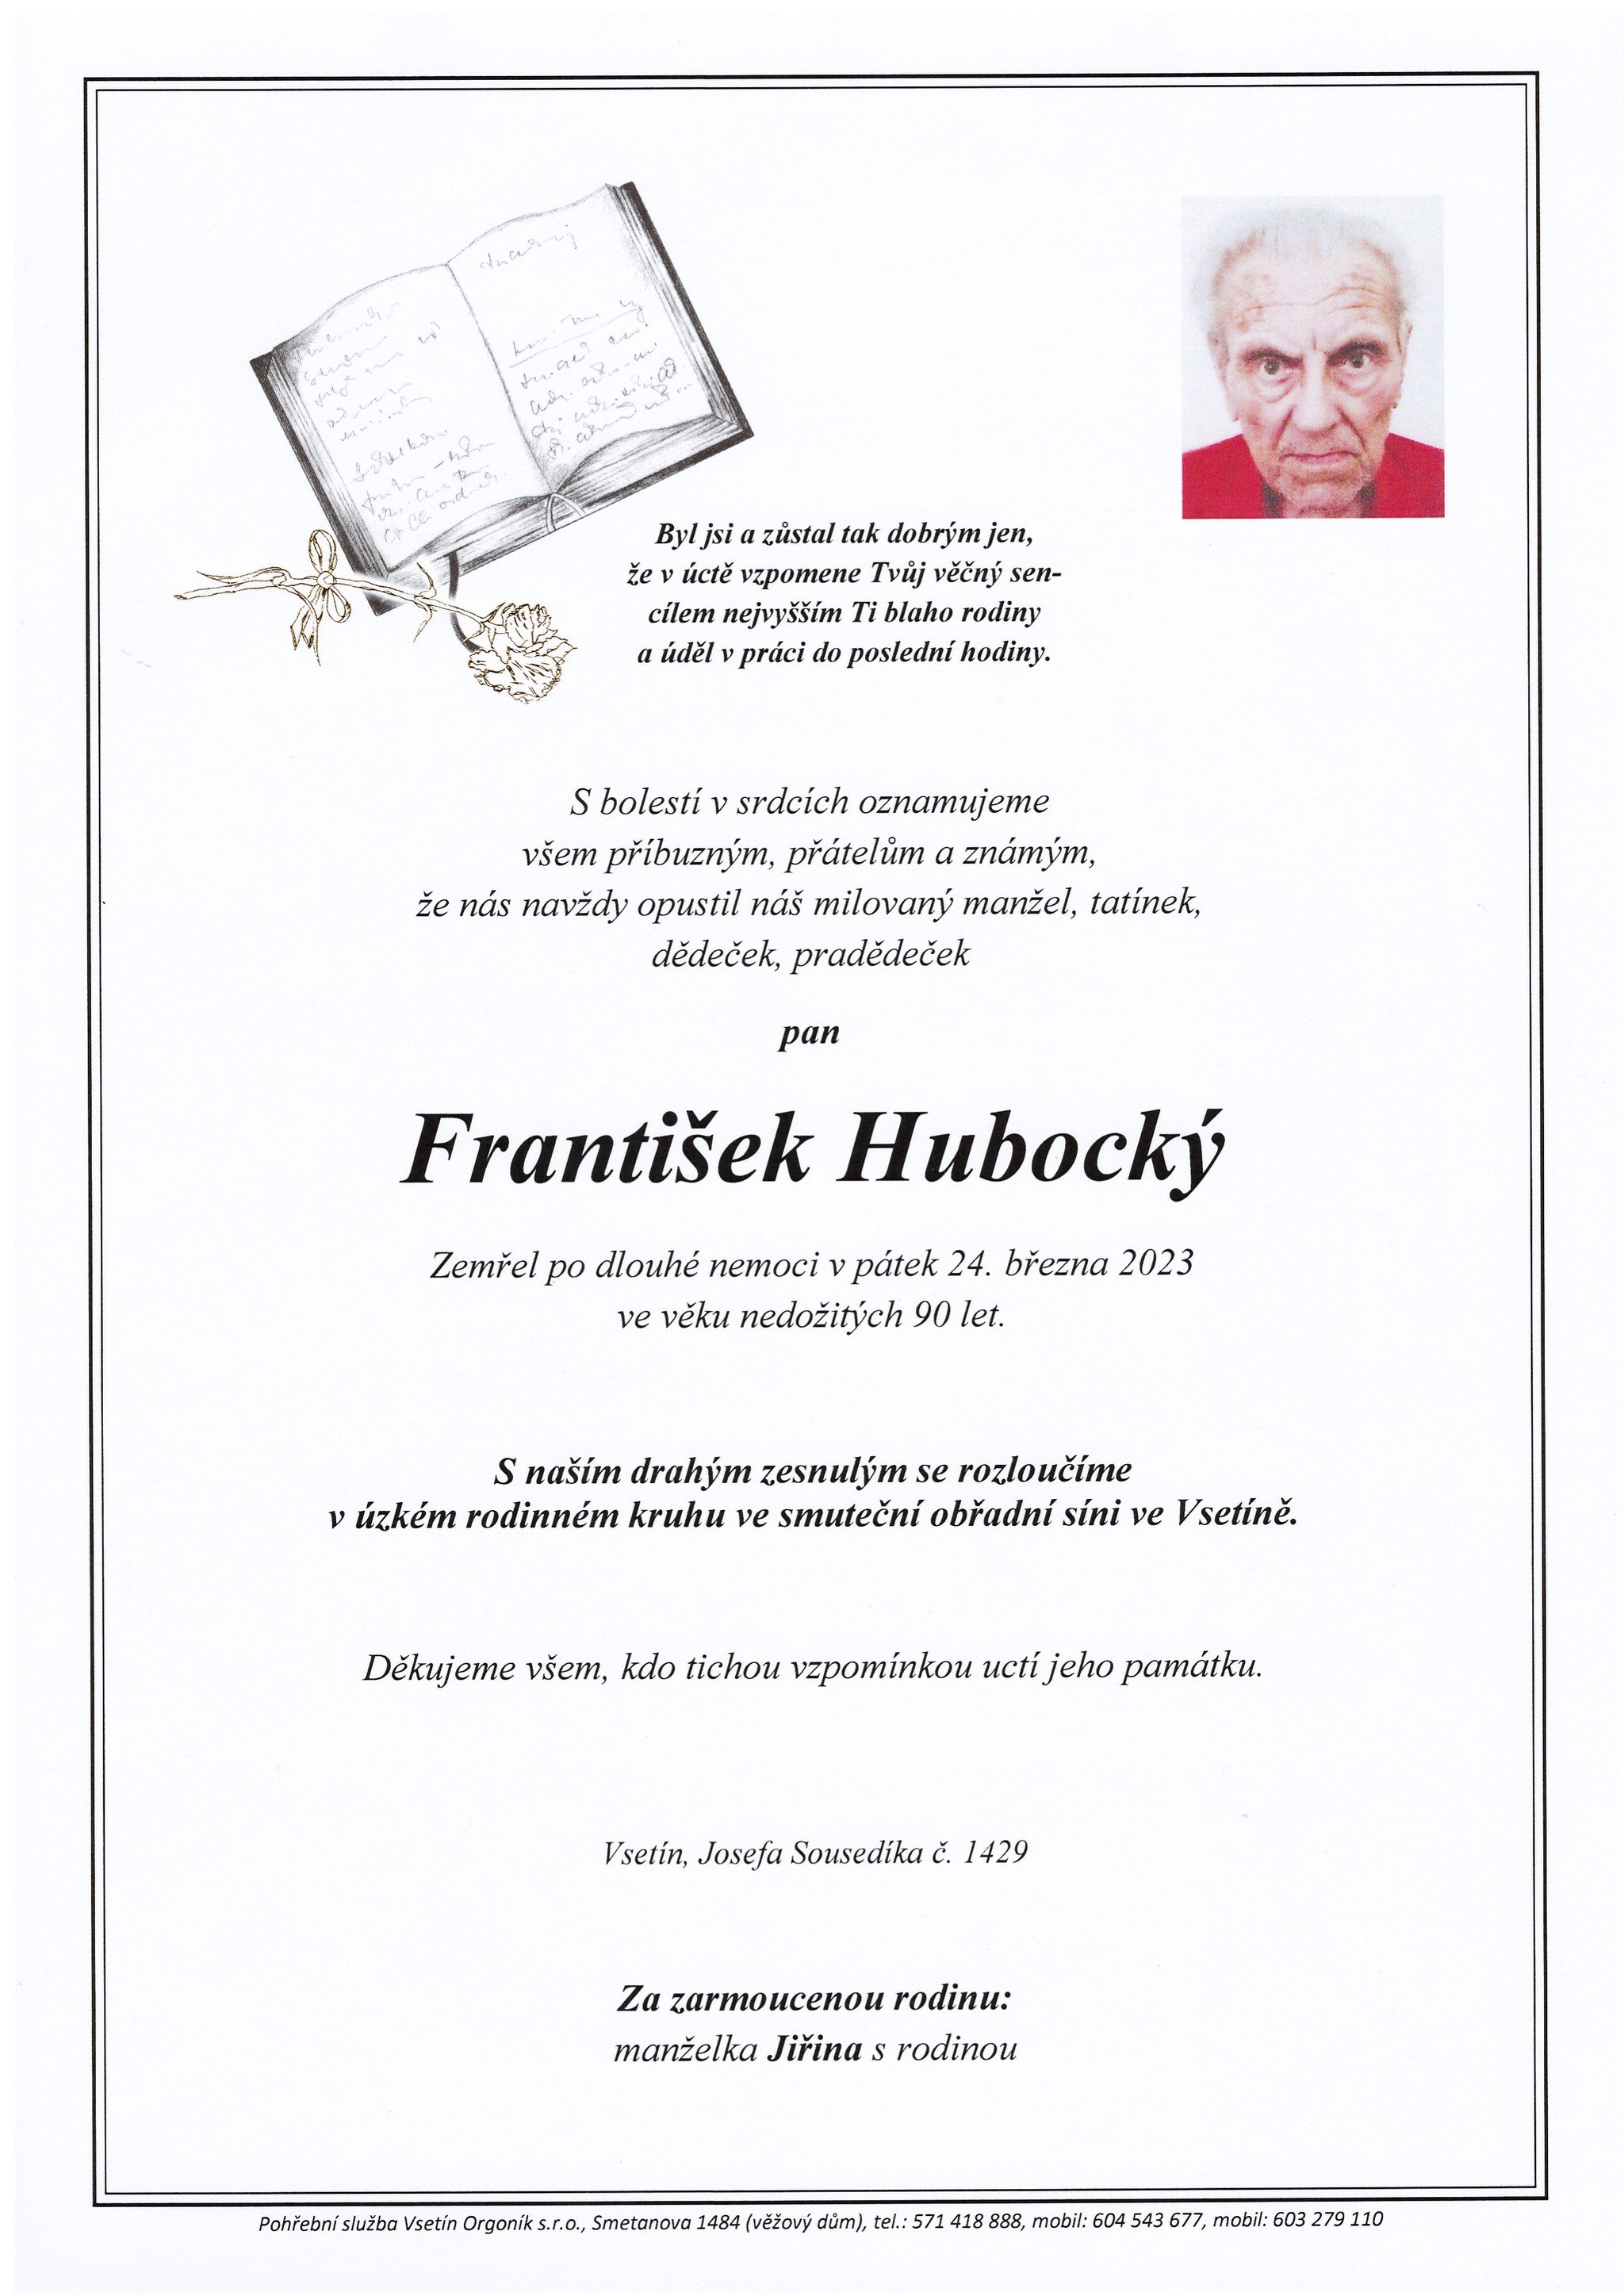 František Hubocký